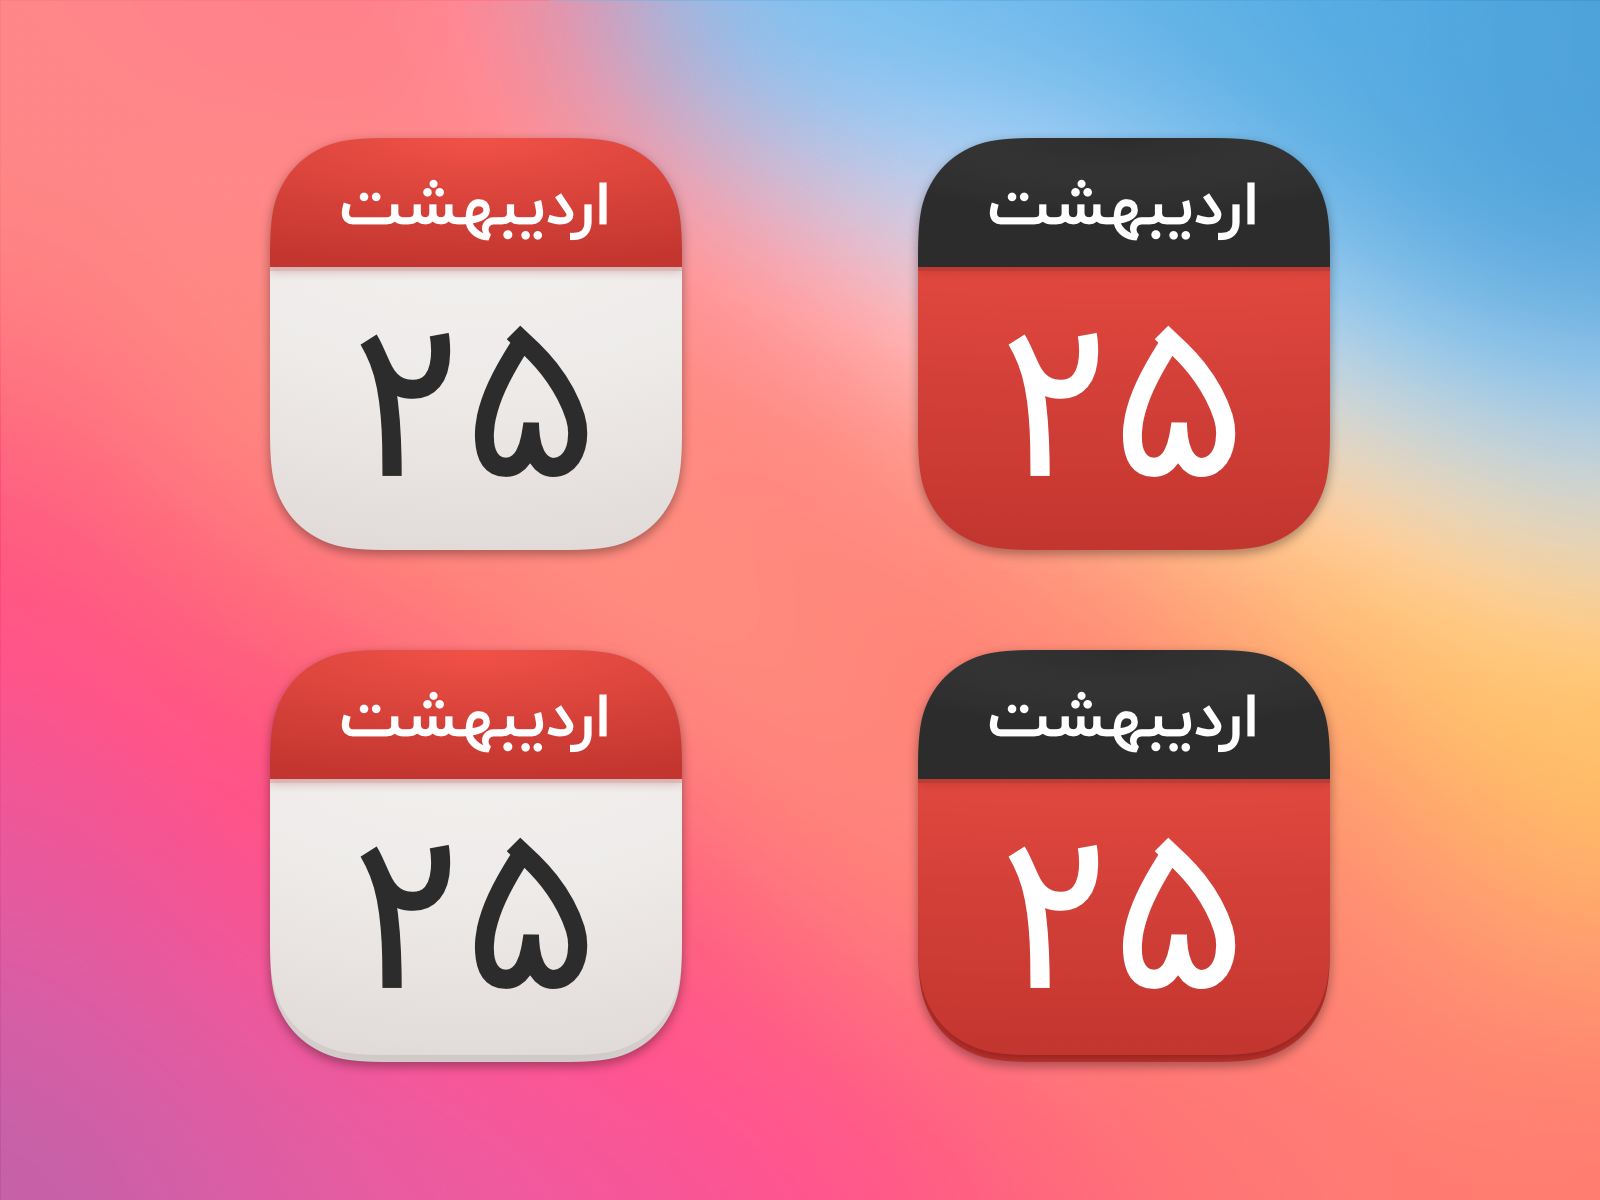 Persian Calendar App Icon by Alireza Kamali on Dribbble